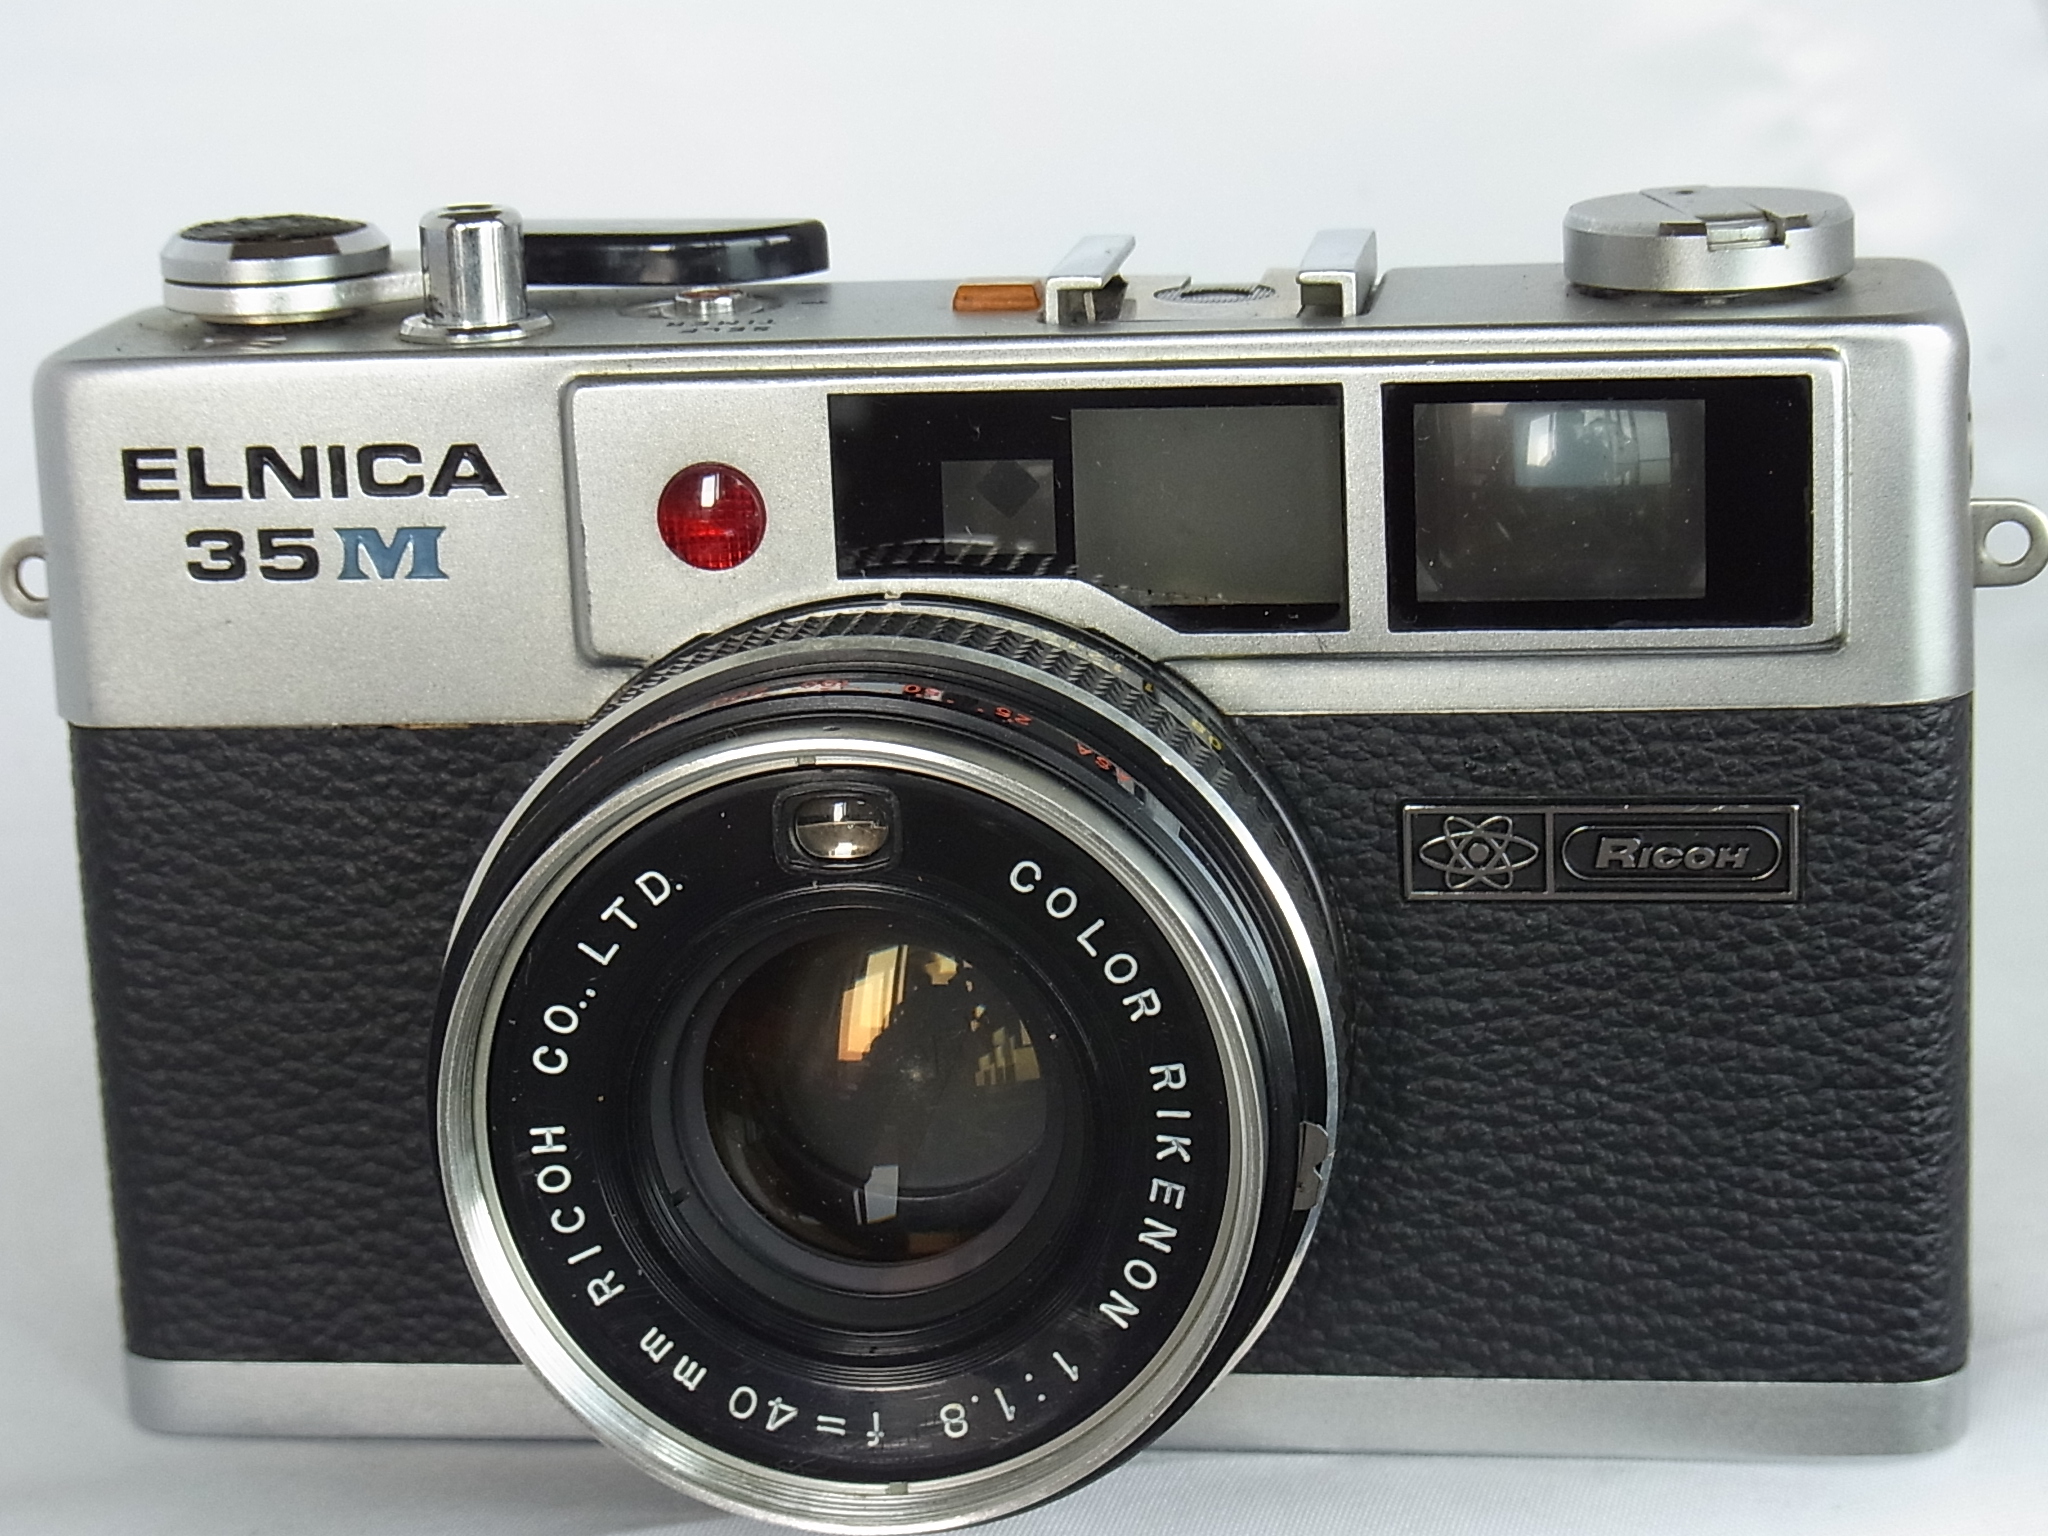 [ утиль ] Ricoh L nika35M compact пленочный фотоаппарат 